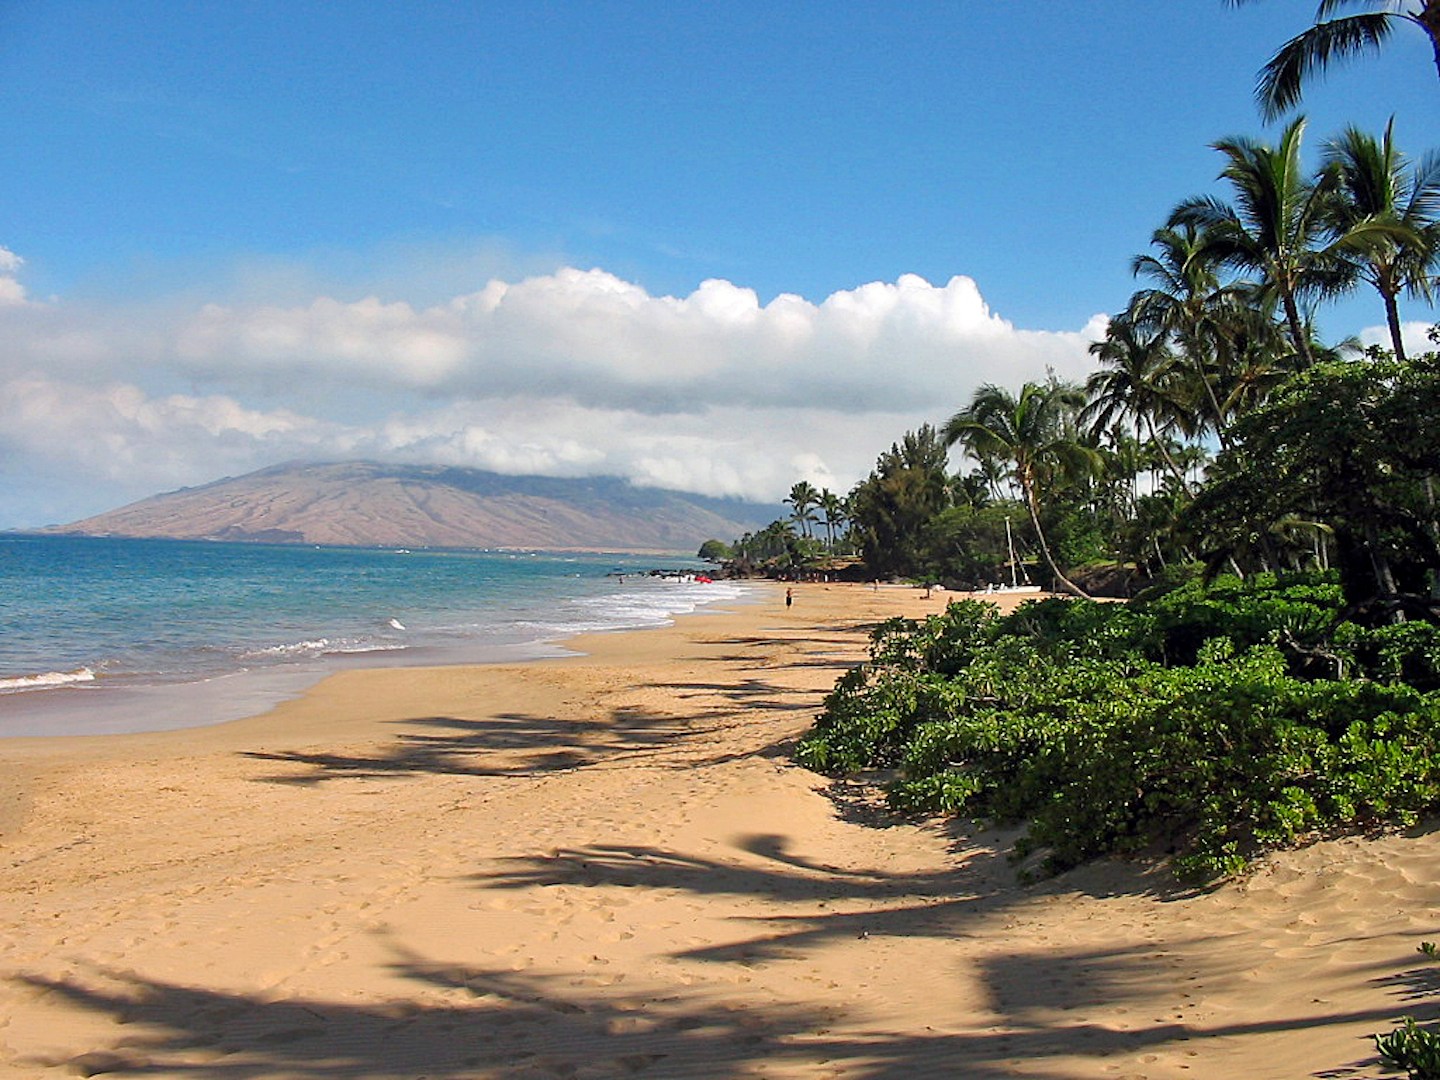 A lonely beach on Maui